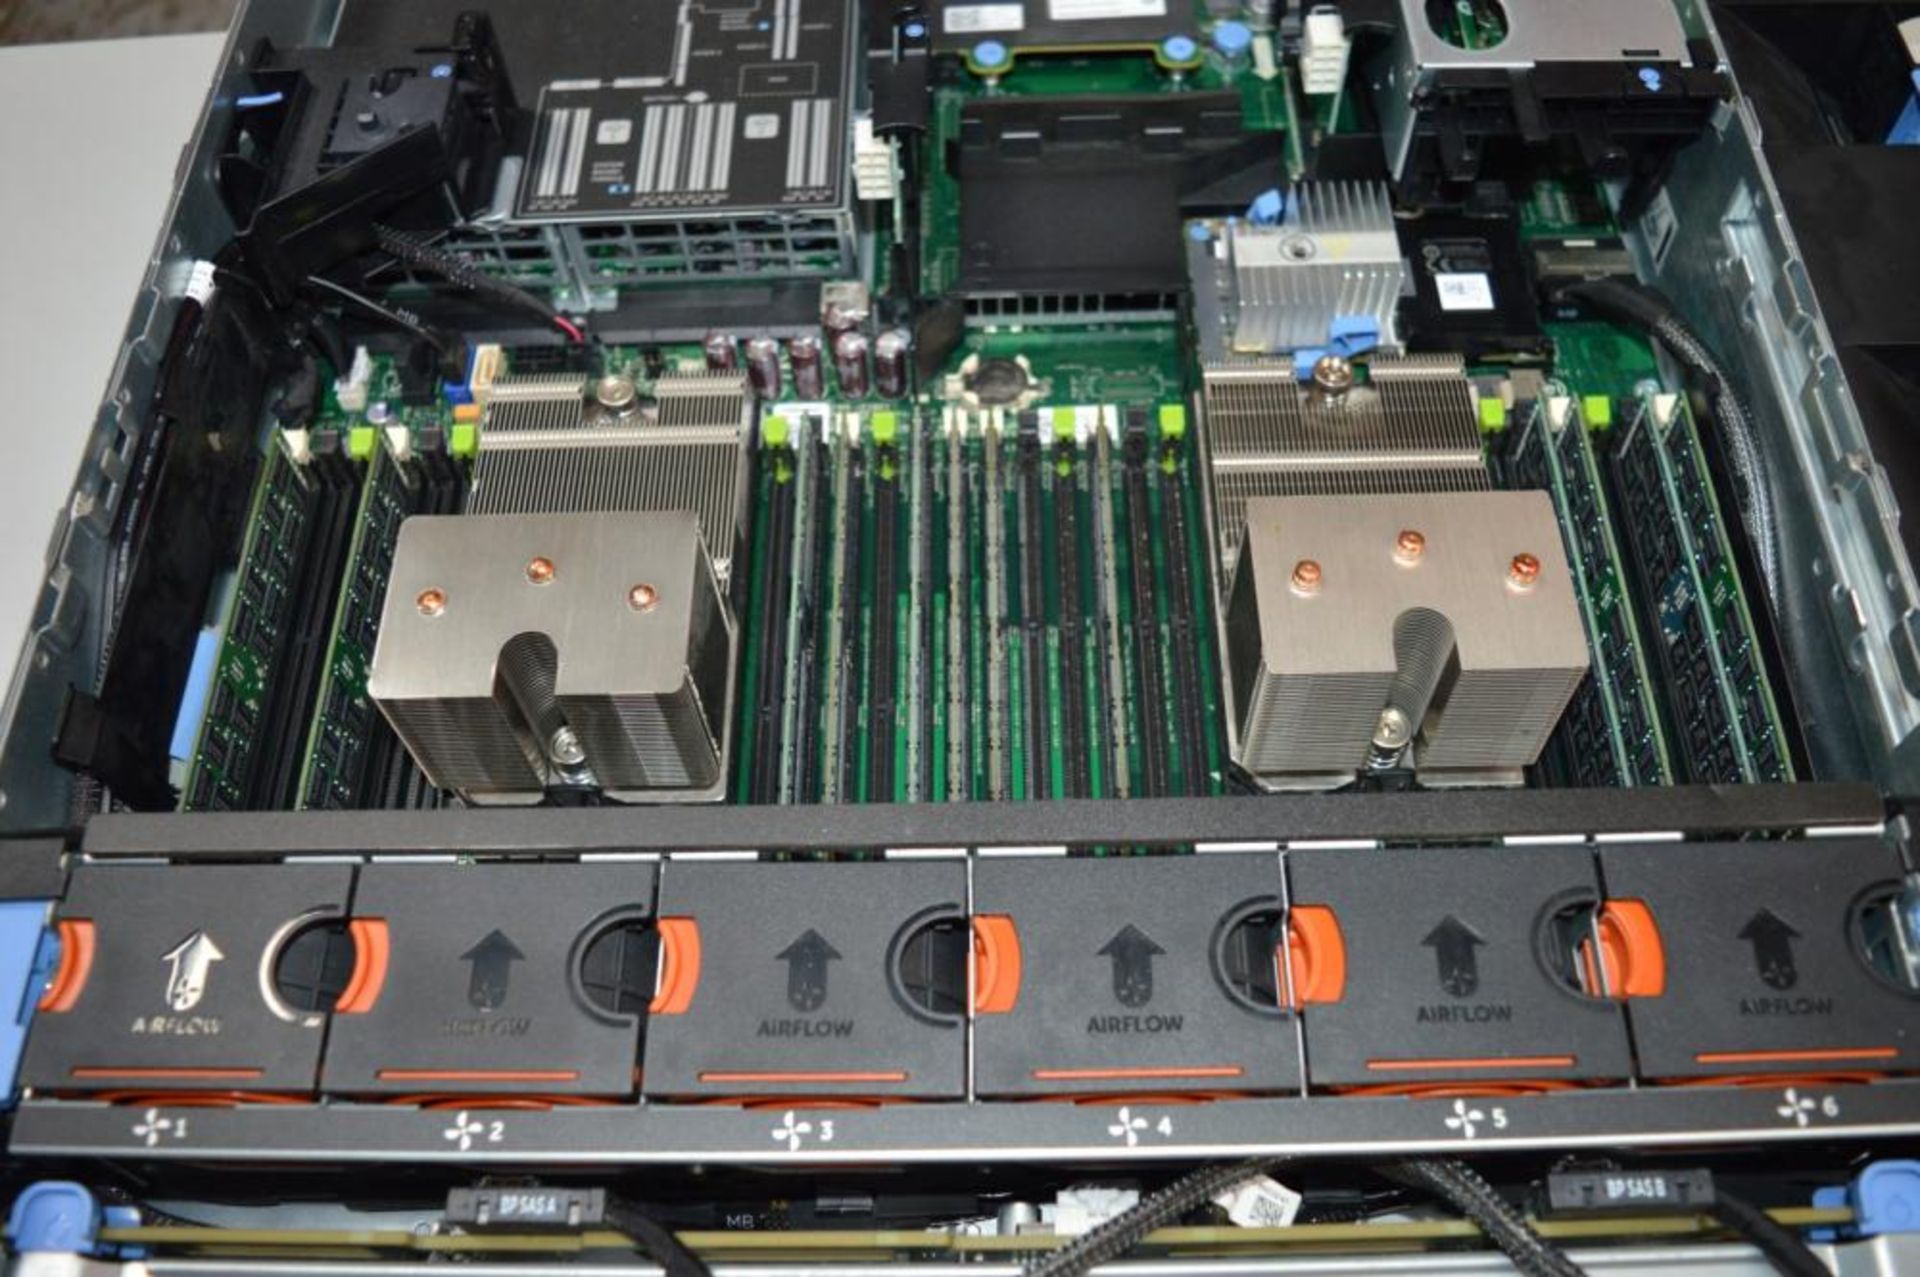 1 x Dell Power Edge R720xd Rack Server - 2 x Intel Xeon E5-2630 Six Core Processors, 128gb DDR3 Ram - Bild 2 aus 5